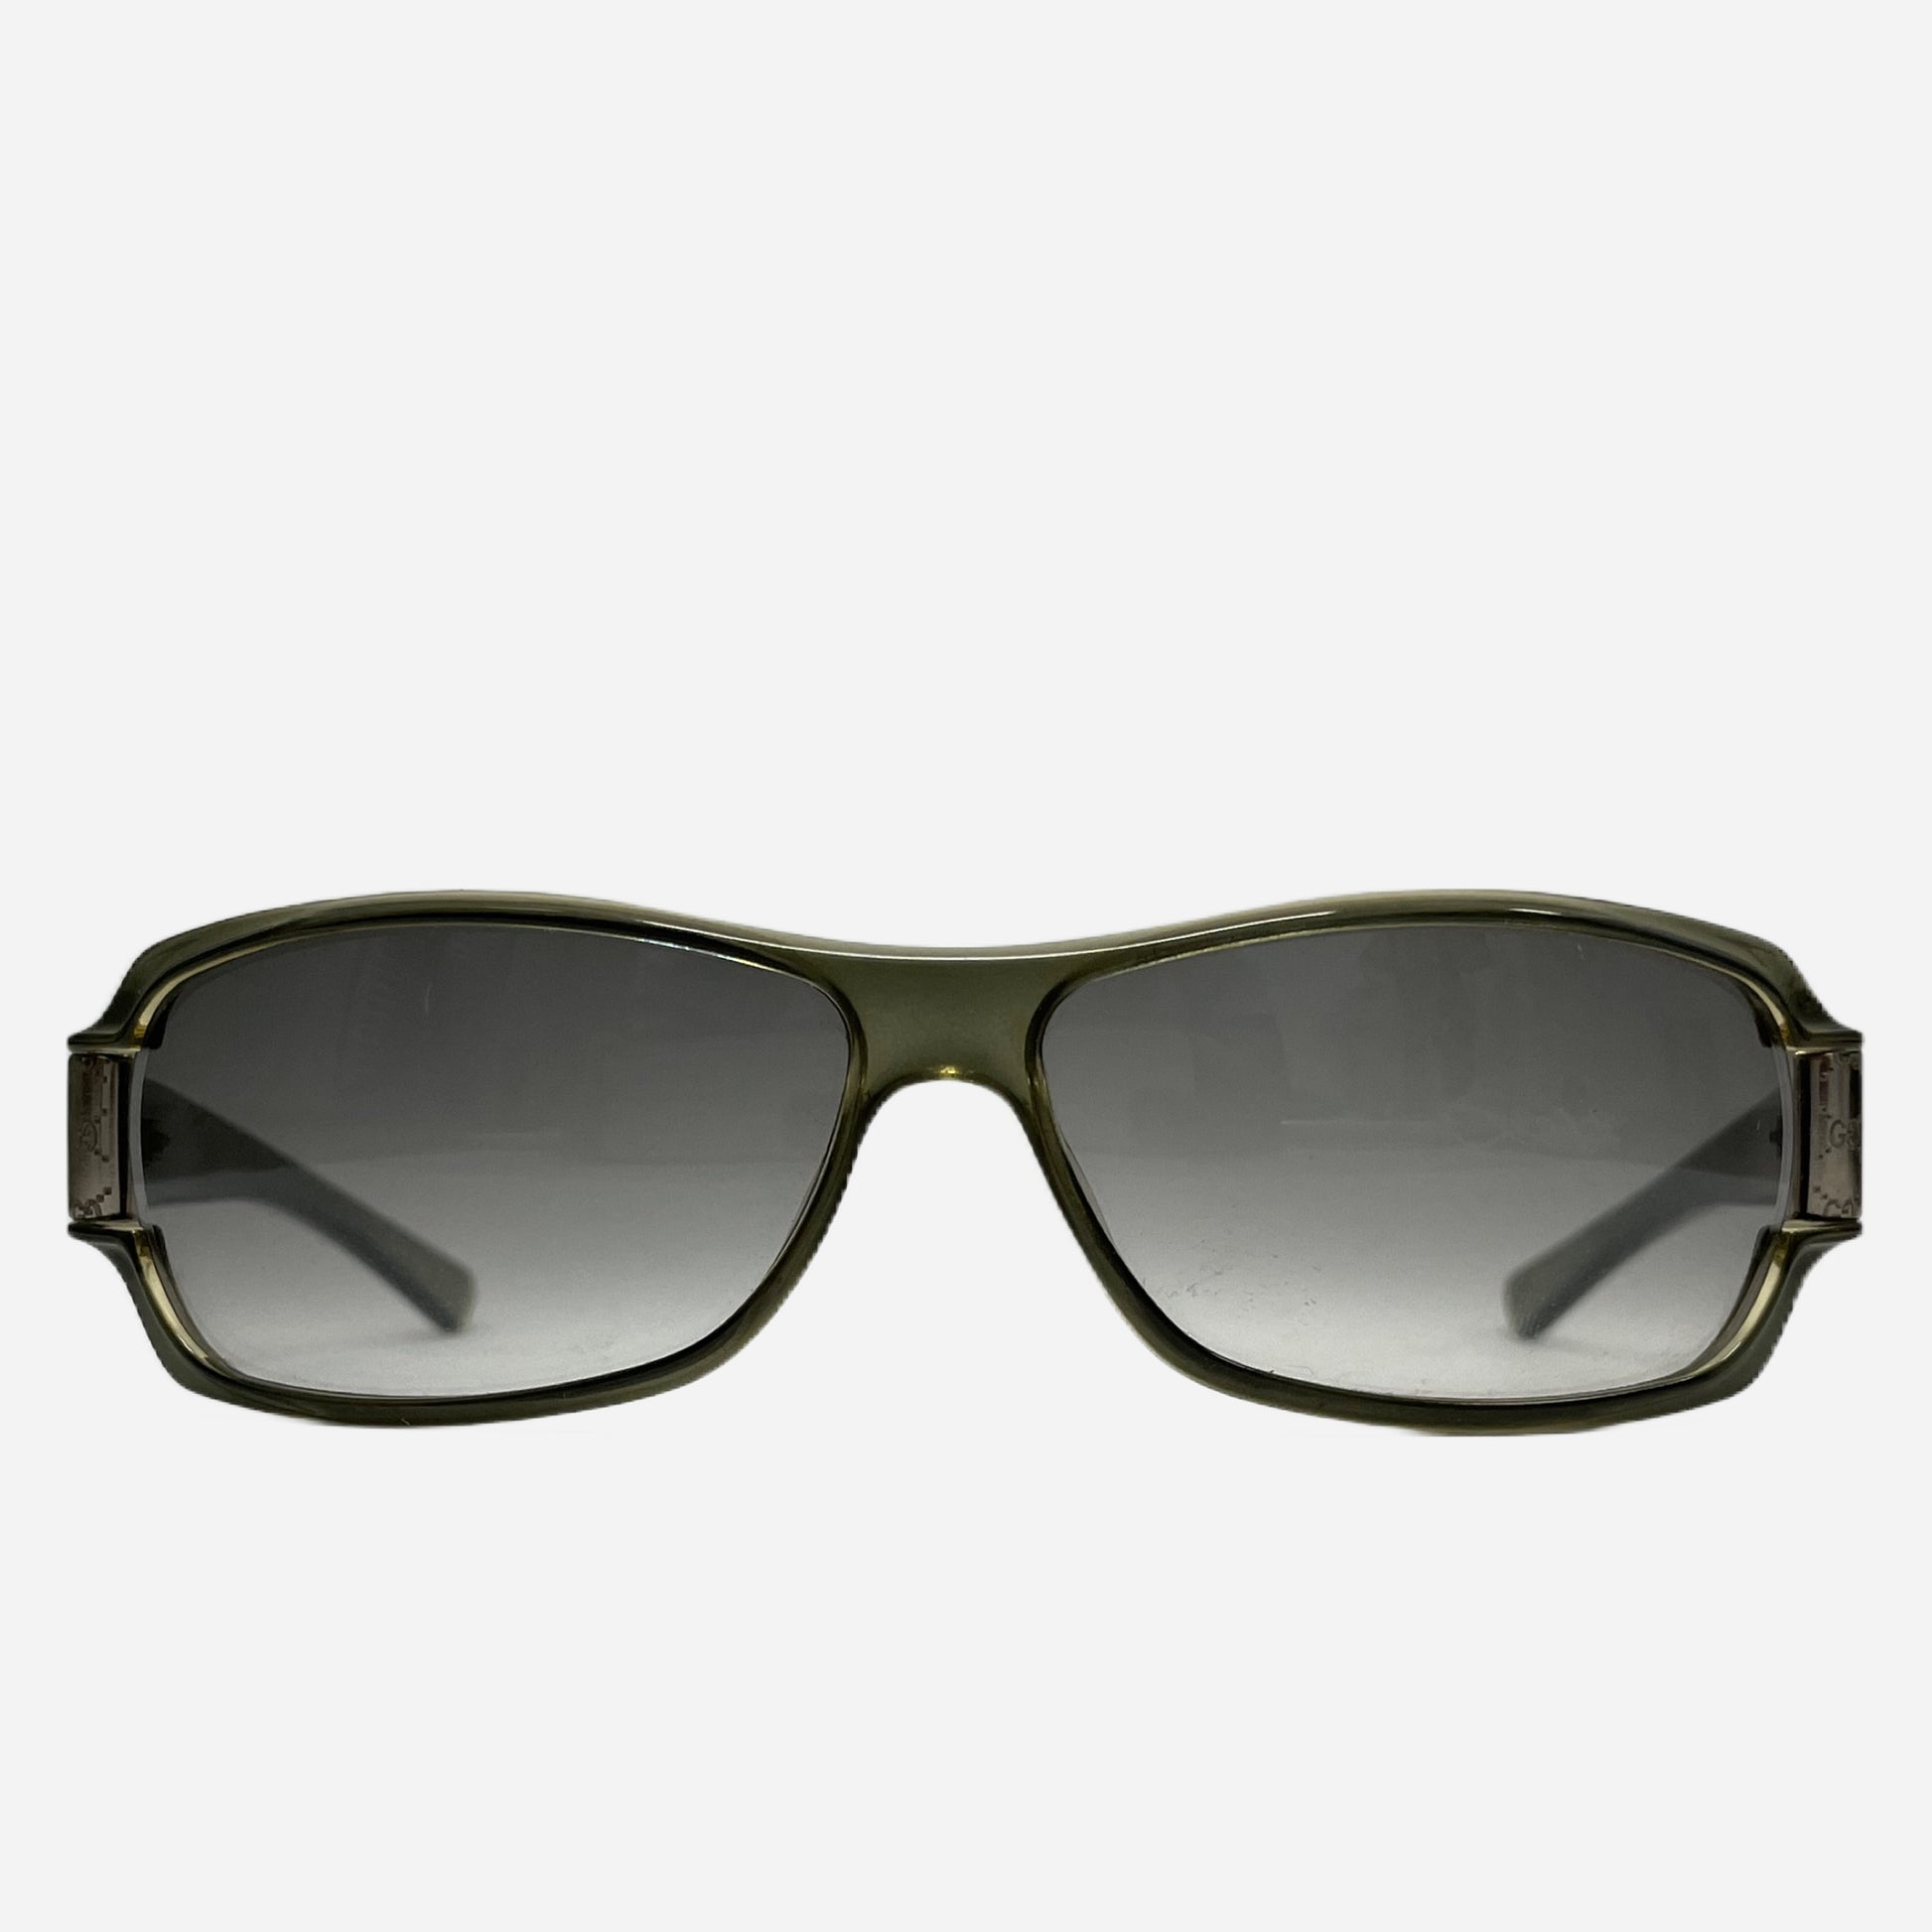 Vintage-Gucci-Sunglasses-Sonnenbrille-Schnelle-Brille-90s-2547_S-The-Seekers